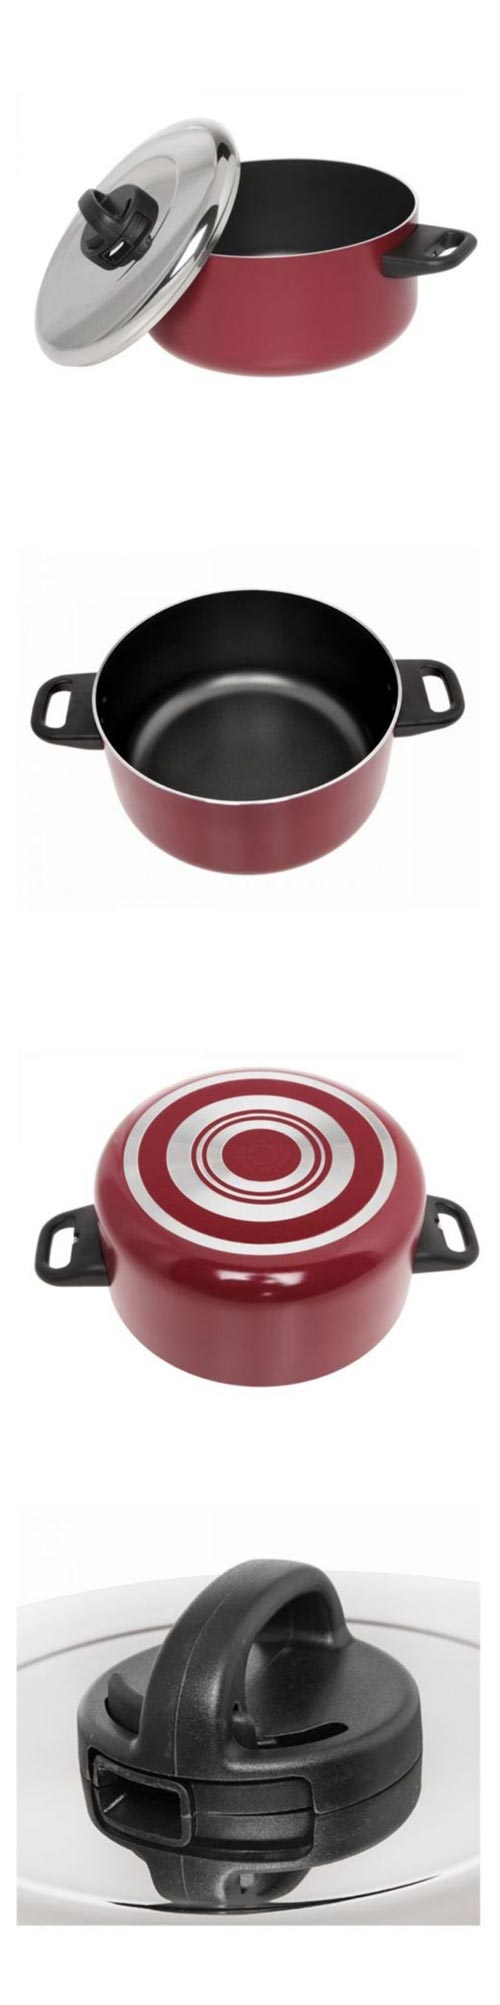 Prestige Cooking Pots 6-Piece Set For Kitchen